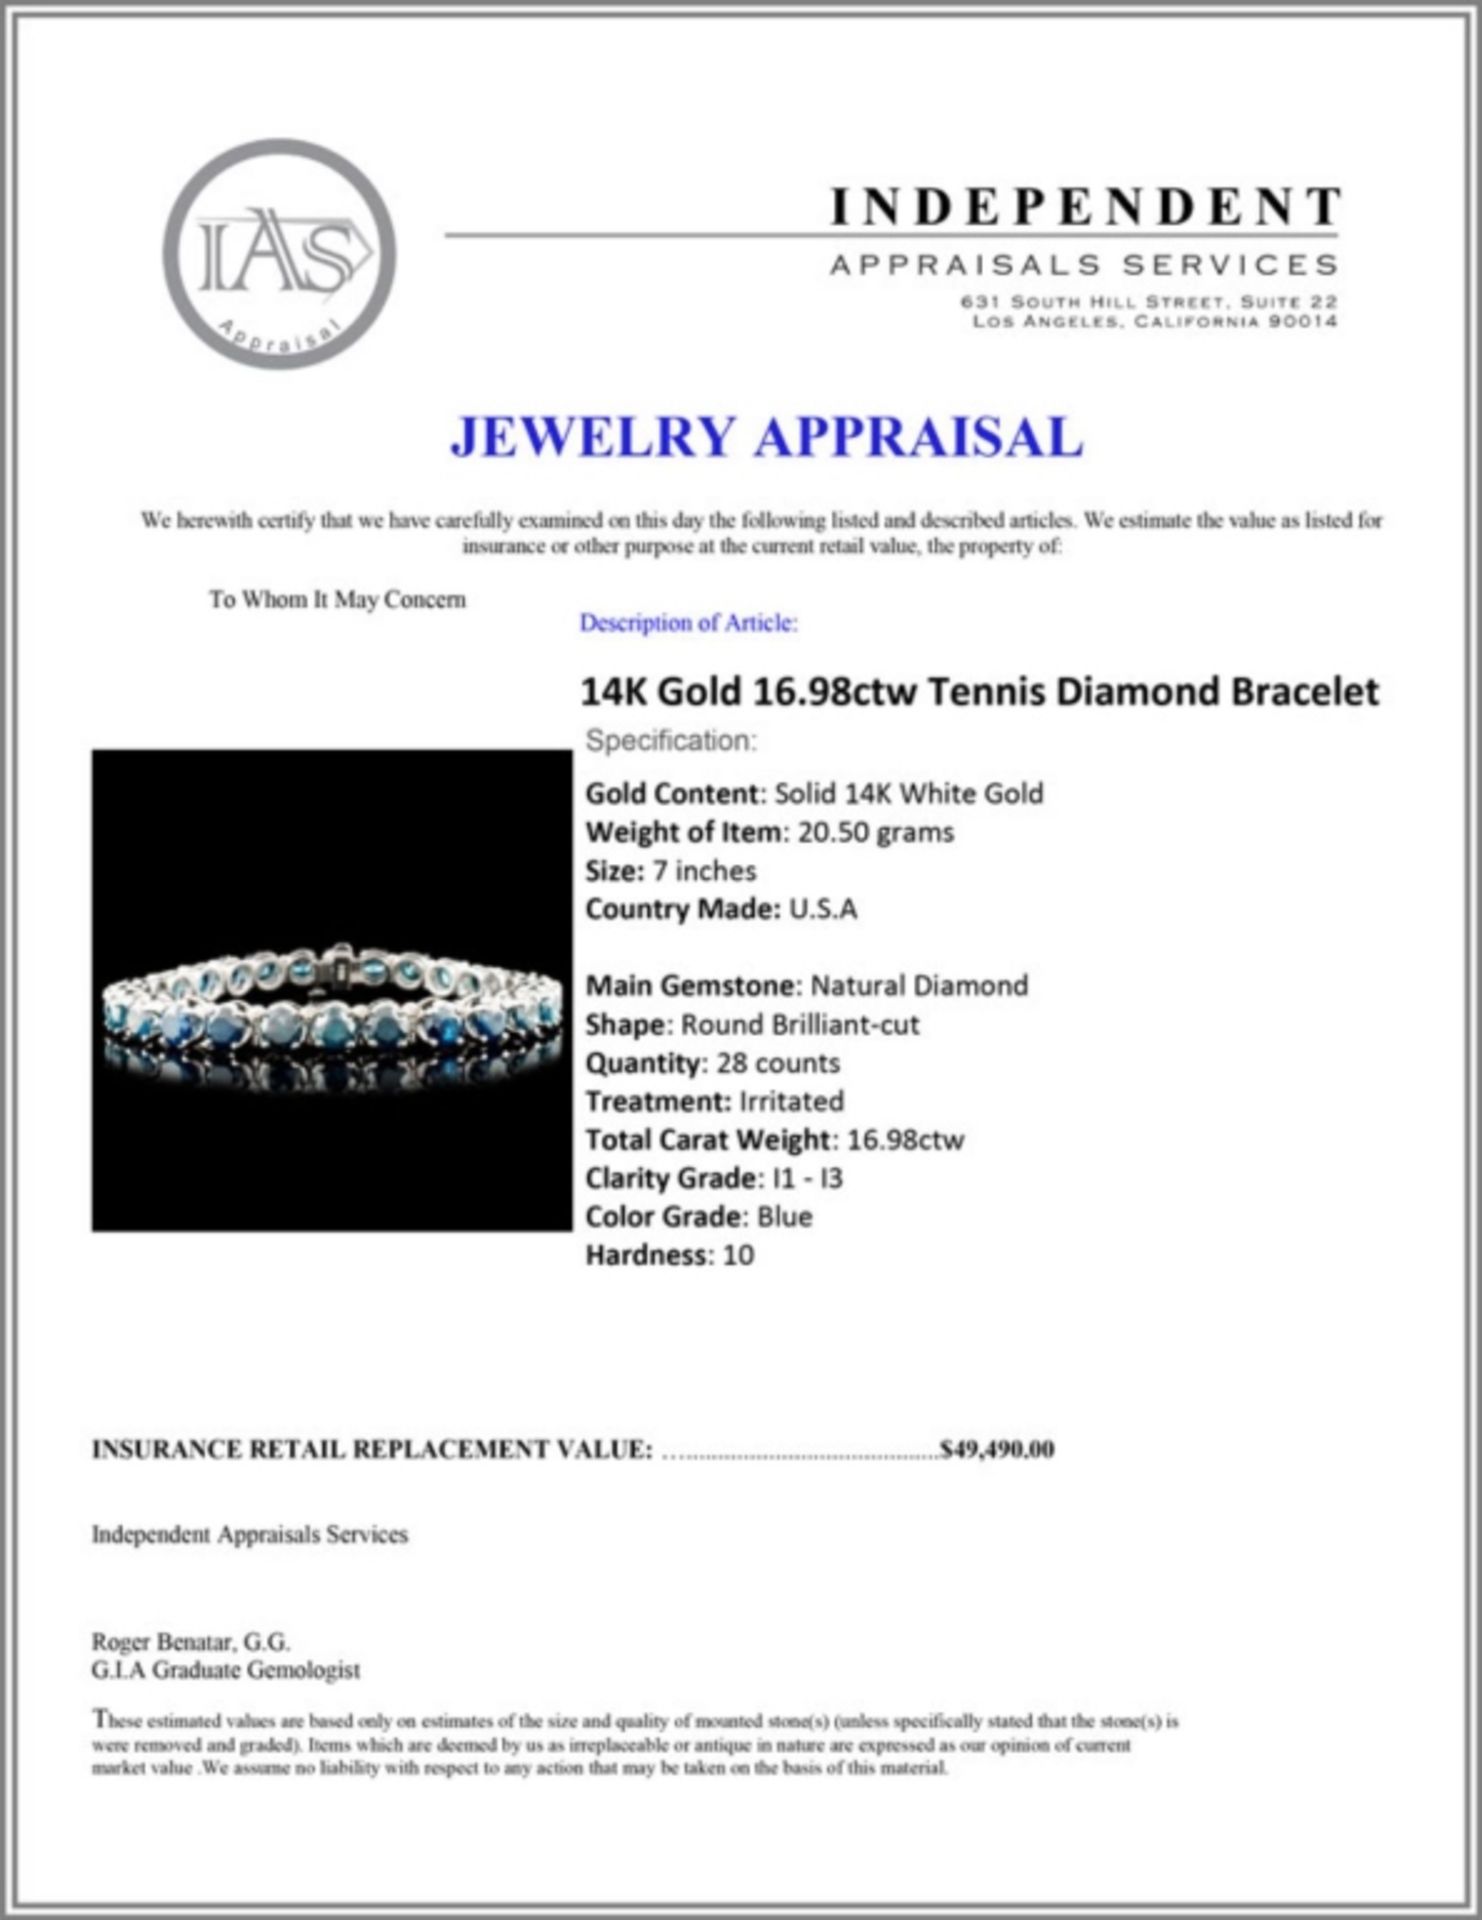 14K Gold 16.98ctw Tennis Diamond Bracelet - Image 4 of 4